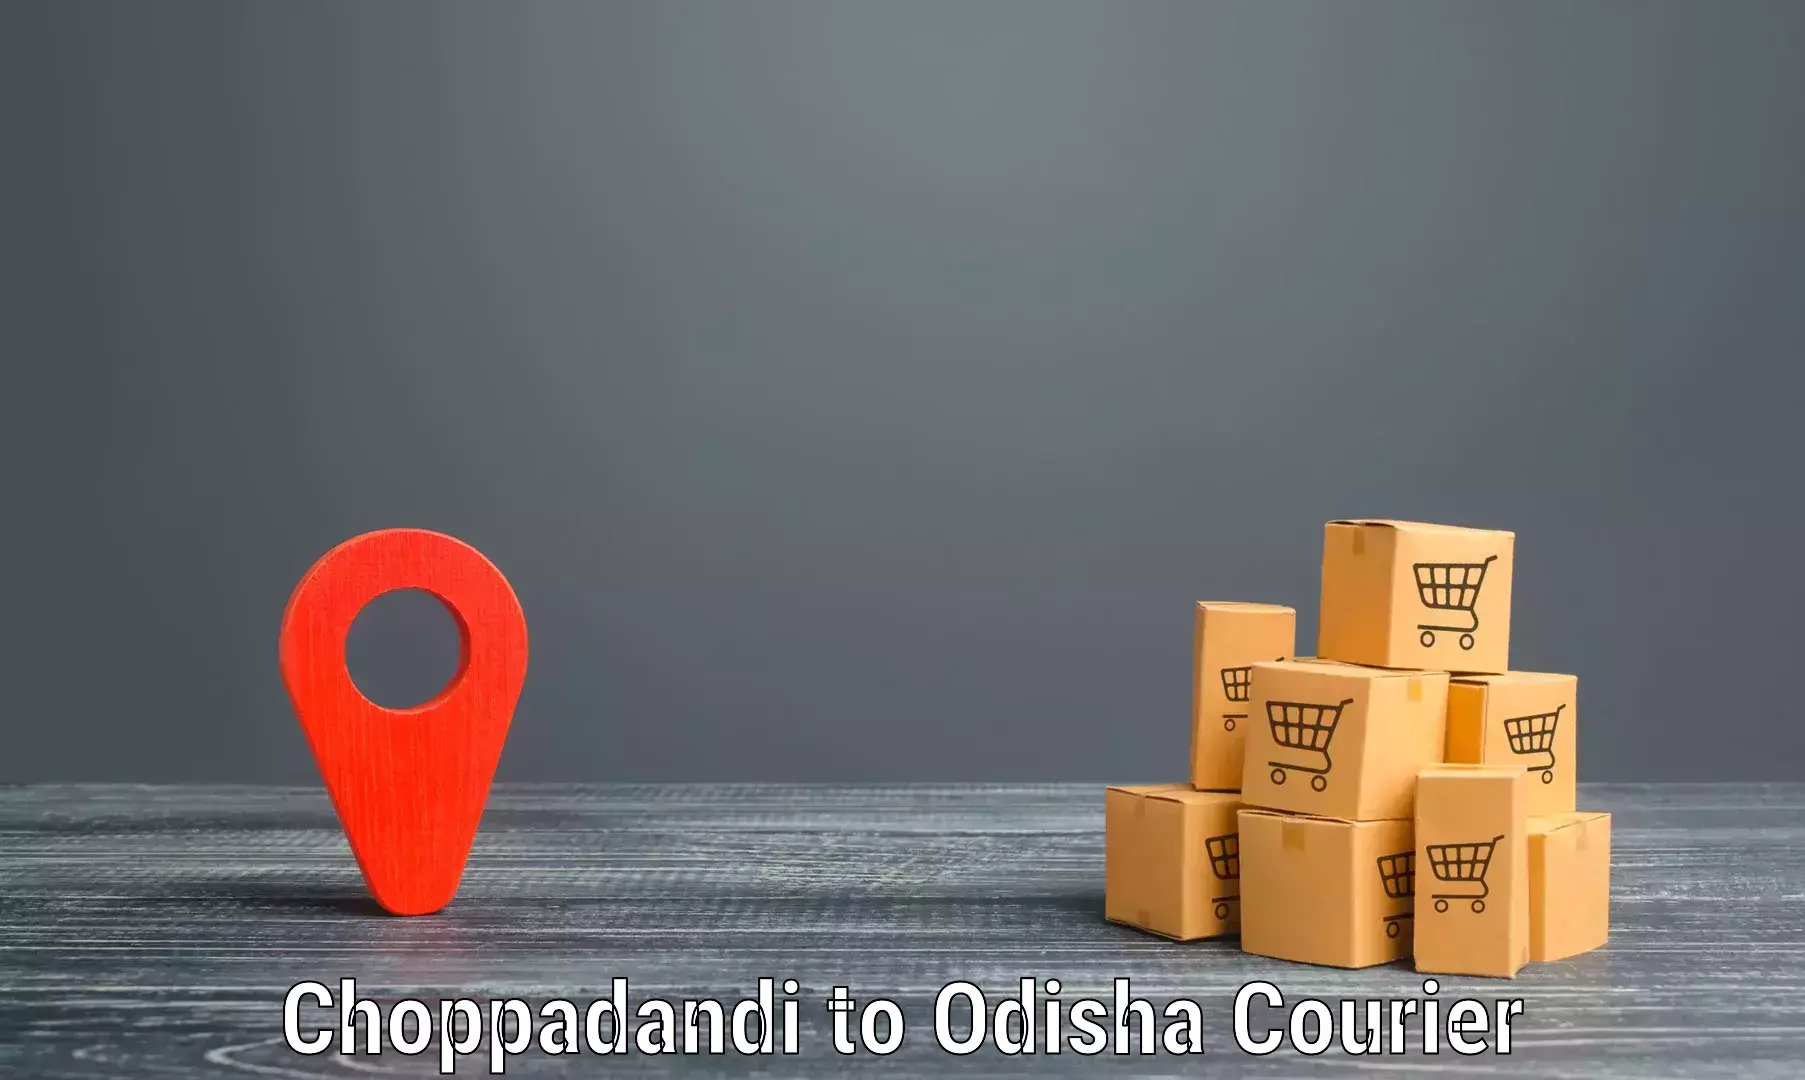 Courier service comparison Choppadandi to Tangi